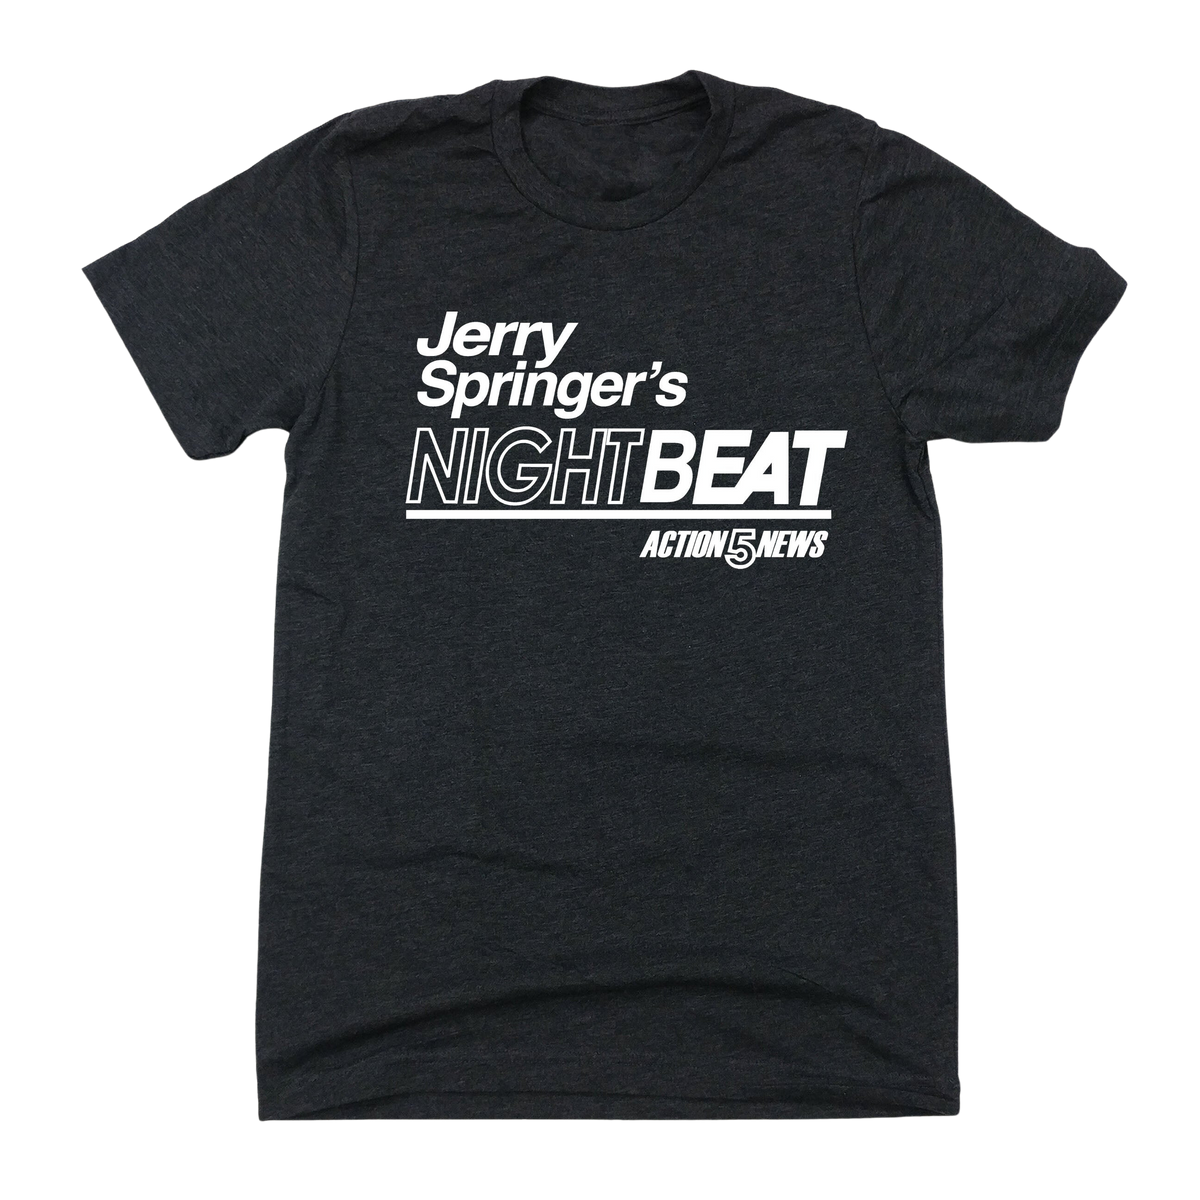 Jerry Springer's Nightbeat